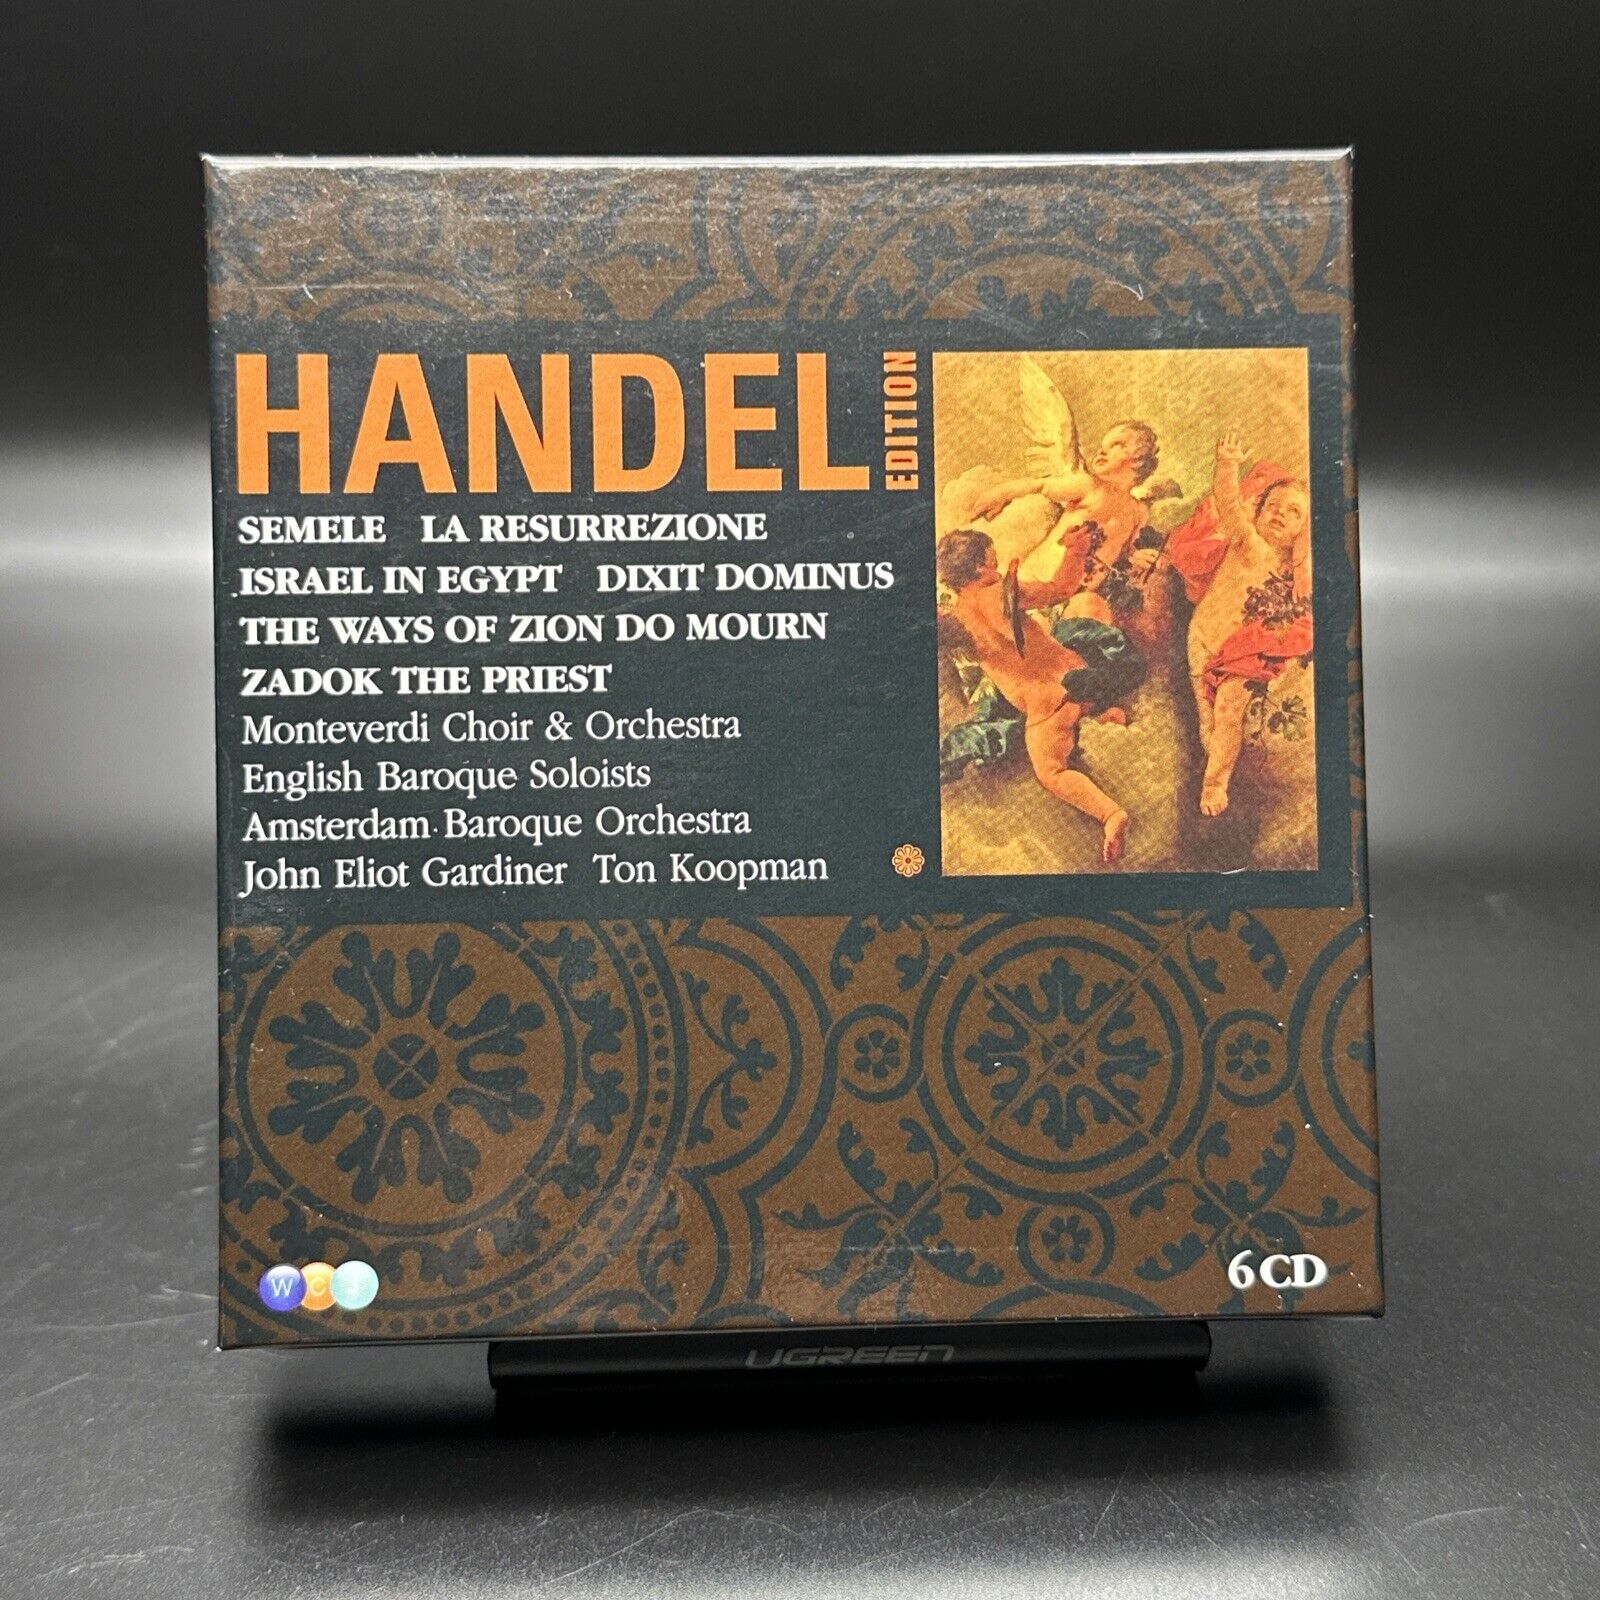 Handel Edition, Semele Israel in Egypt, Gardiner Koopman [Erato 6 CD Box Set] NM